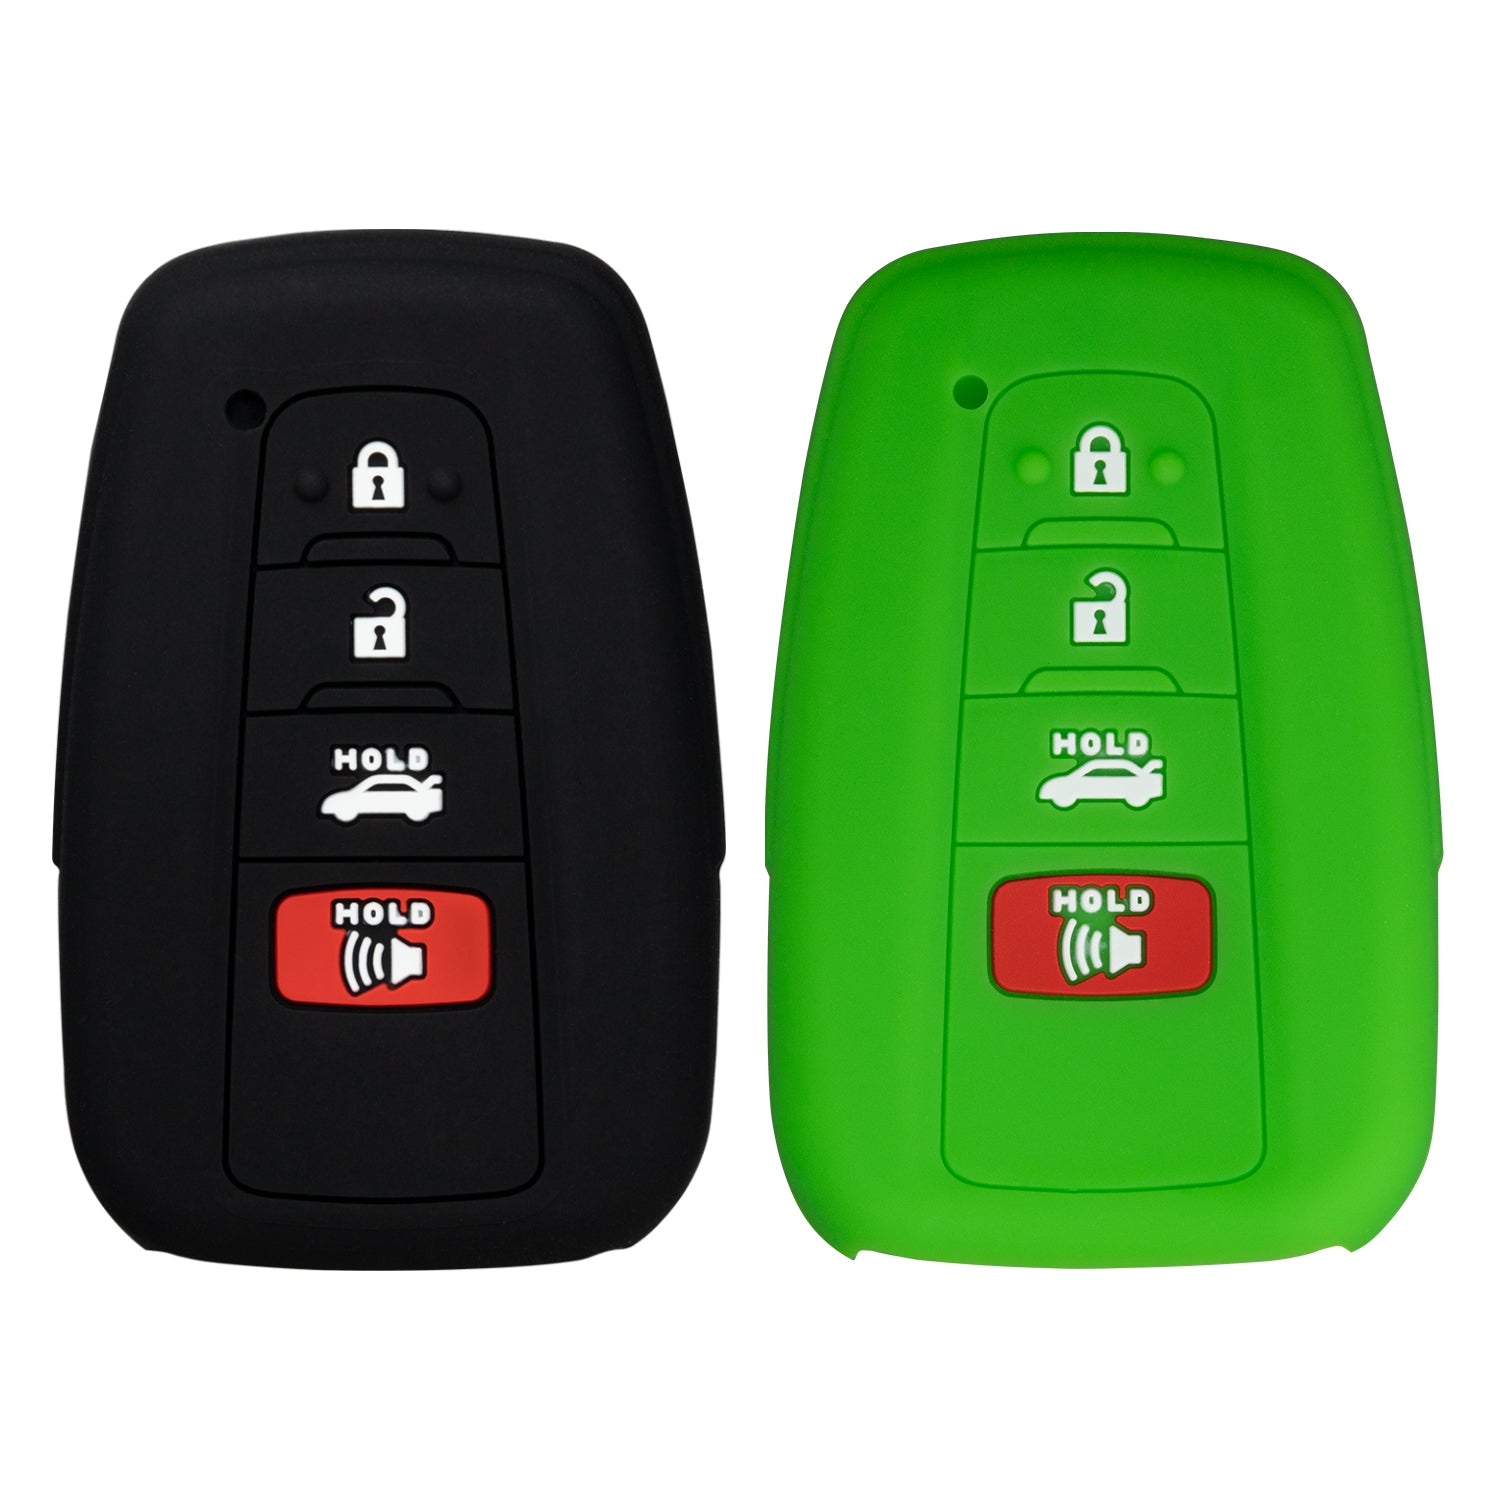 Silicone Case 4 Button Shell for Toyota Smart Proximity Remote Key HYQ14FBE, HYQ14FBC, HYQ14AHP, HYQ14FBN (Black & Green)